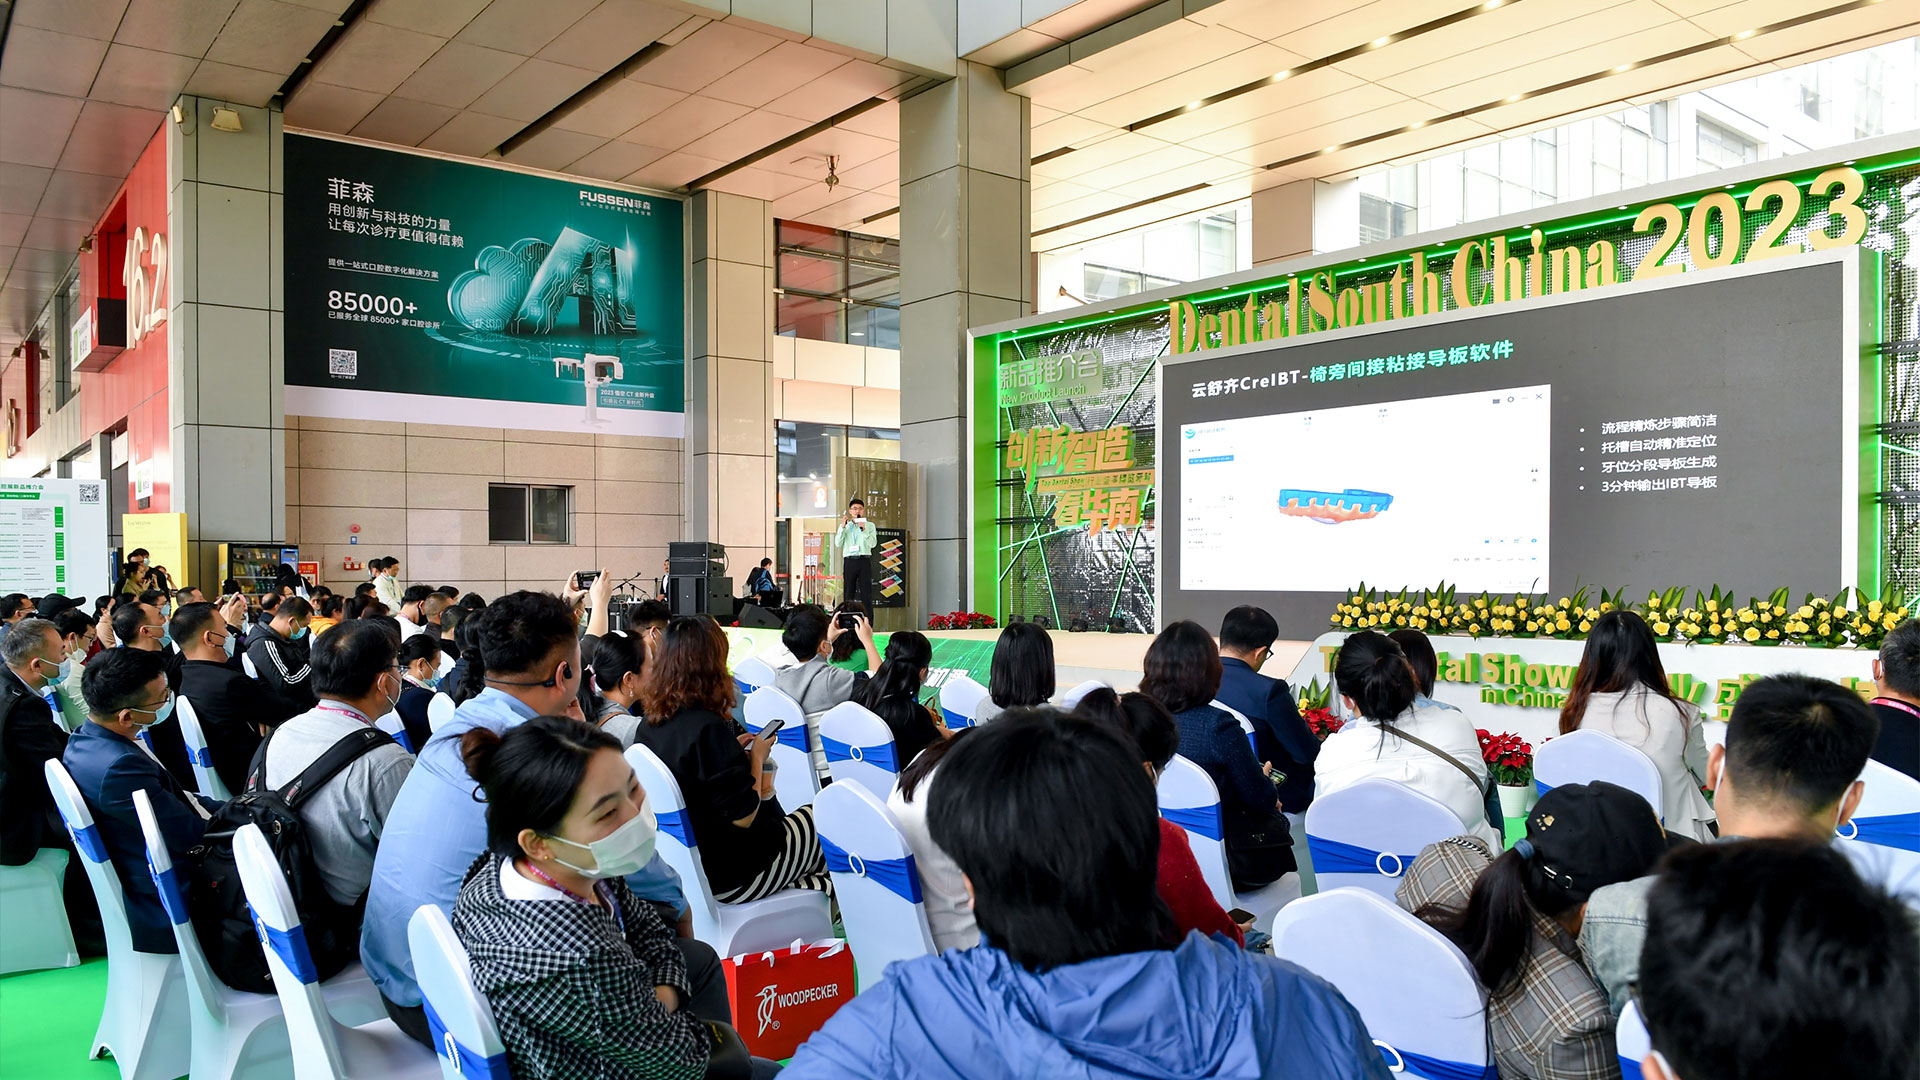 Dental South China 2023 attracted around 62,000 visitors. (Image: Dental South China)